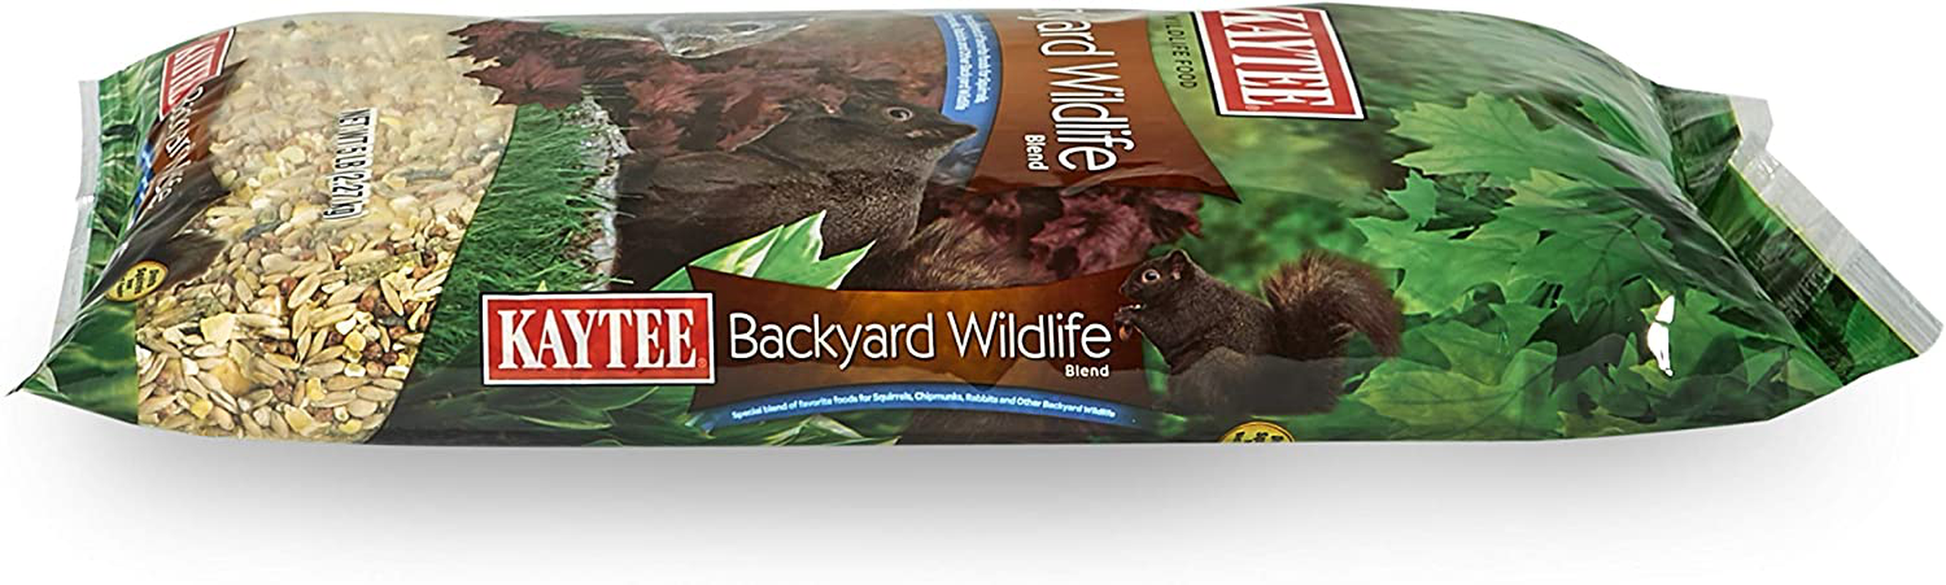 Kaytee Backyard Wildlife Food for Wild Rabbits, Squirrels, and Chipmunks, 5 Lb